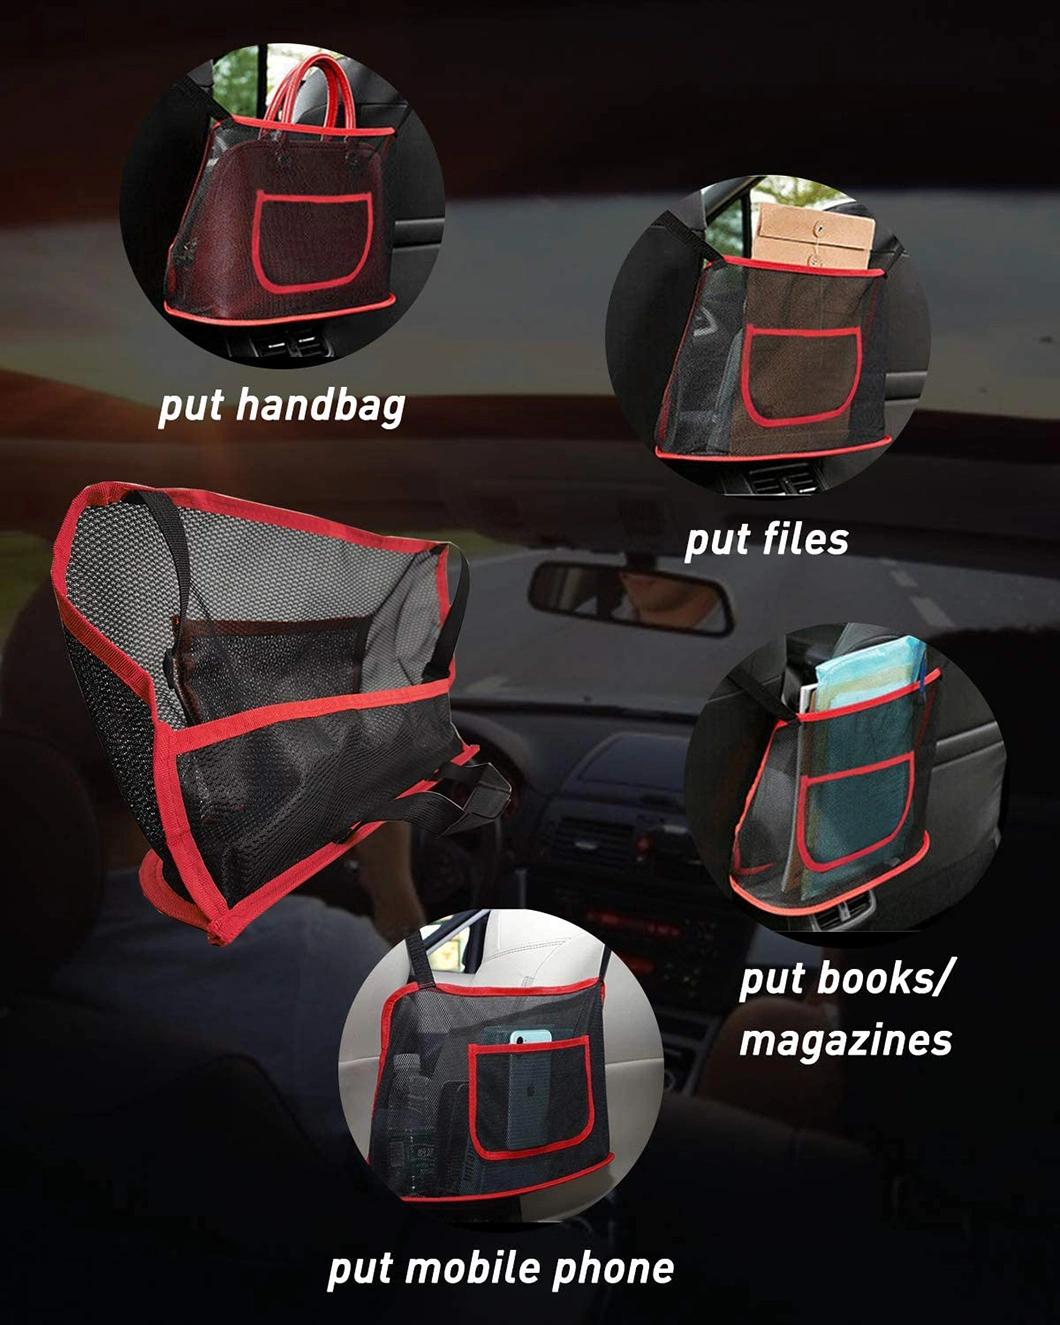 Car Net Pocket Handbag Holder Between Seats, Car Organizers Mesh, Barrier of Backseat Pet Kids, Car Storage Bag for Purse Phone Books Documents, Driver Storage